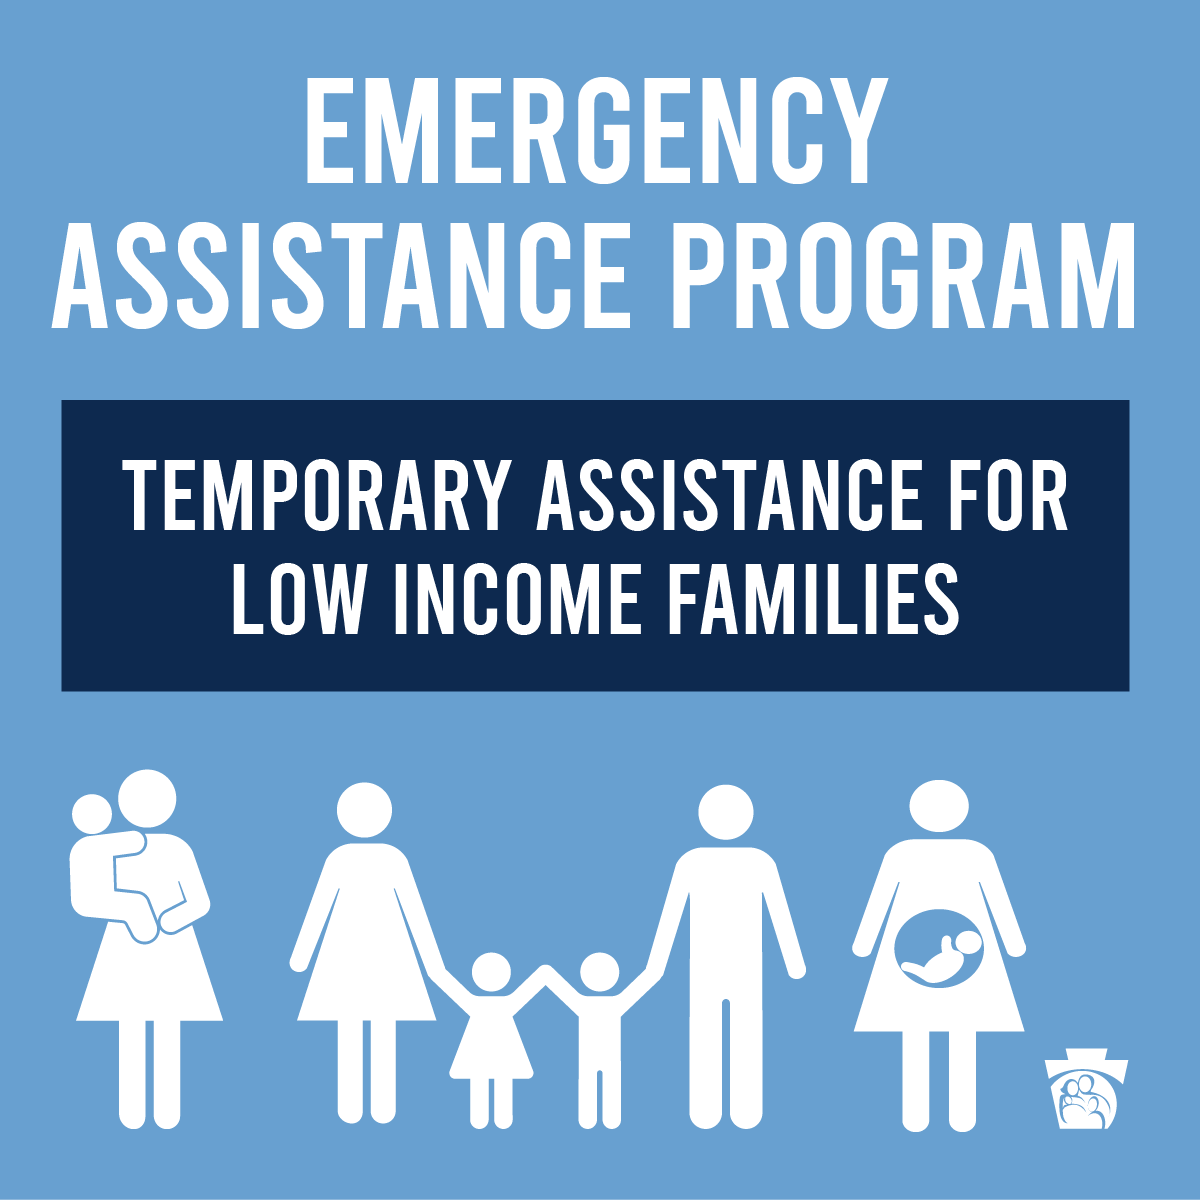 Emergency assistance programs